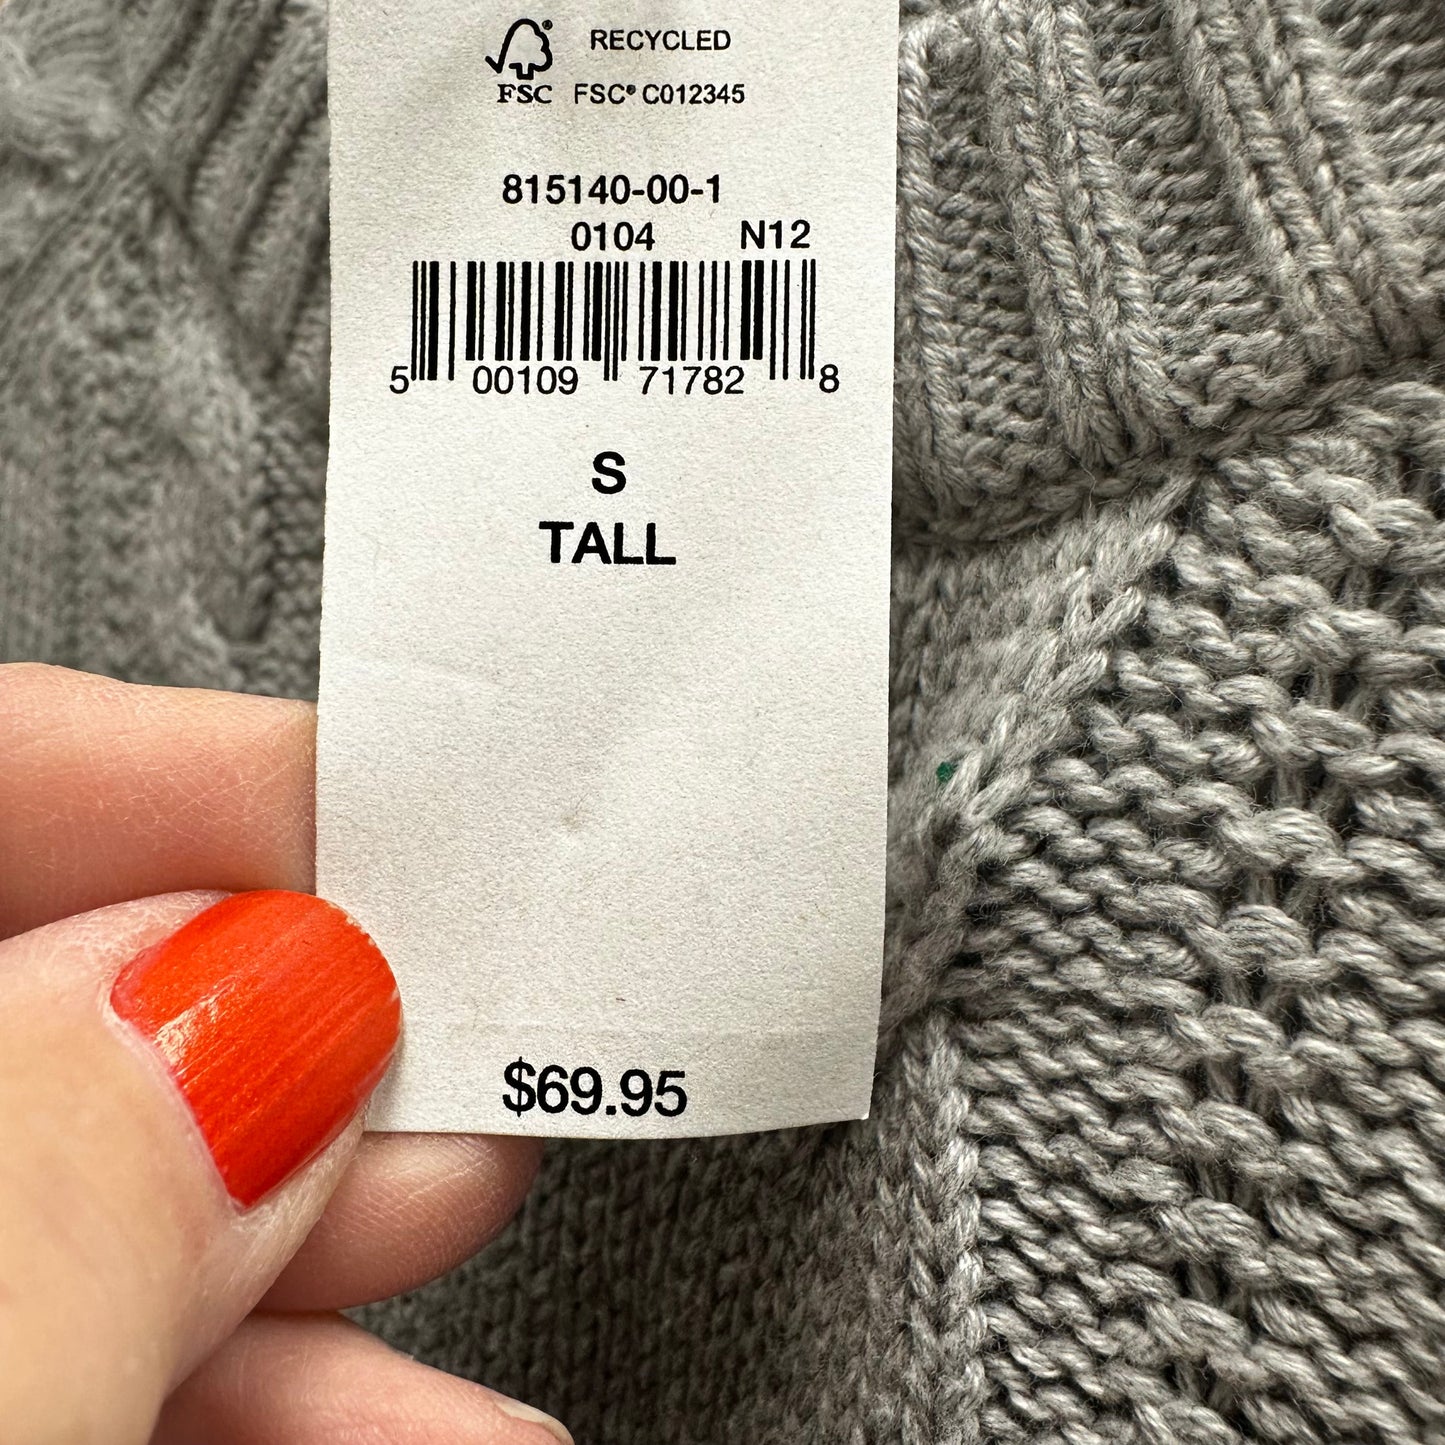 Gray Sweater Gap, Size S tall